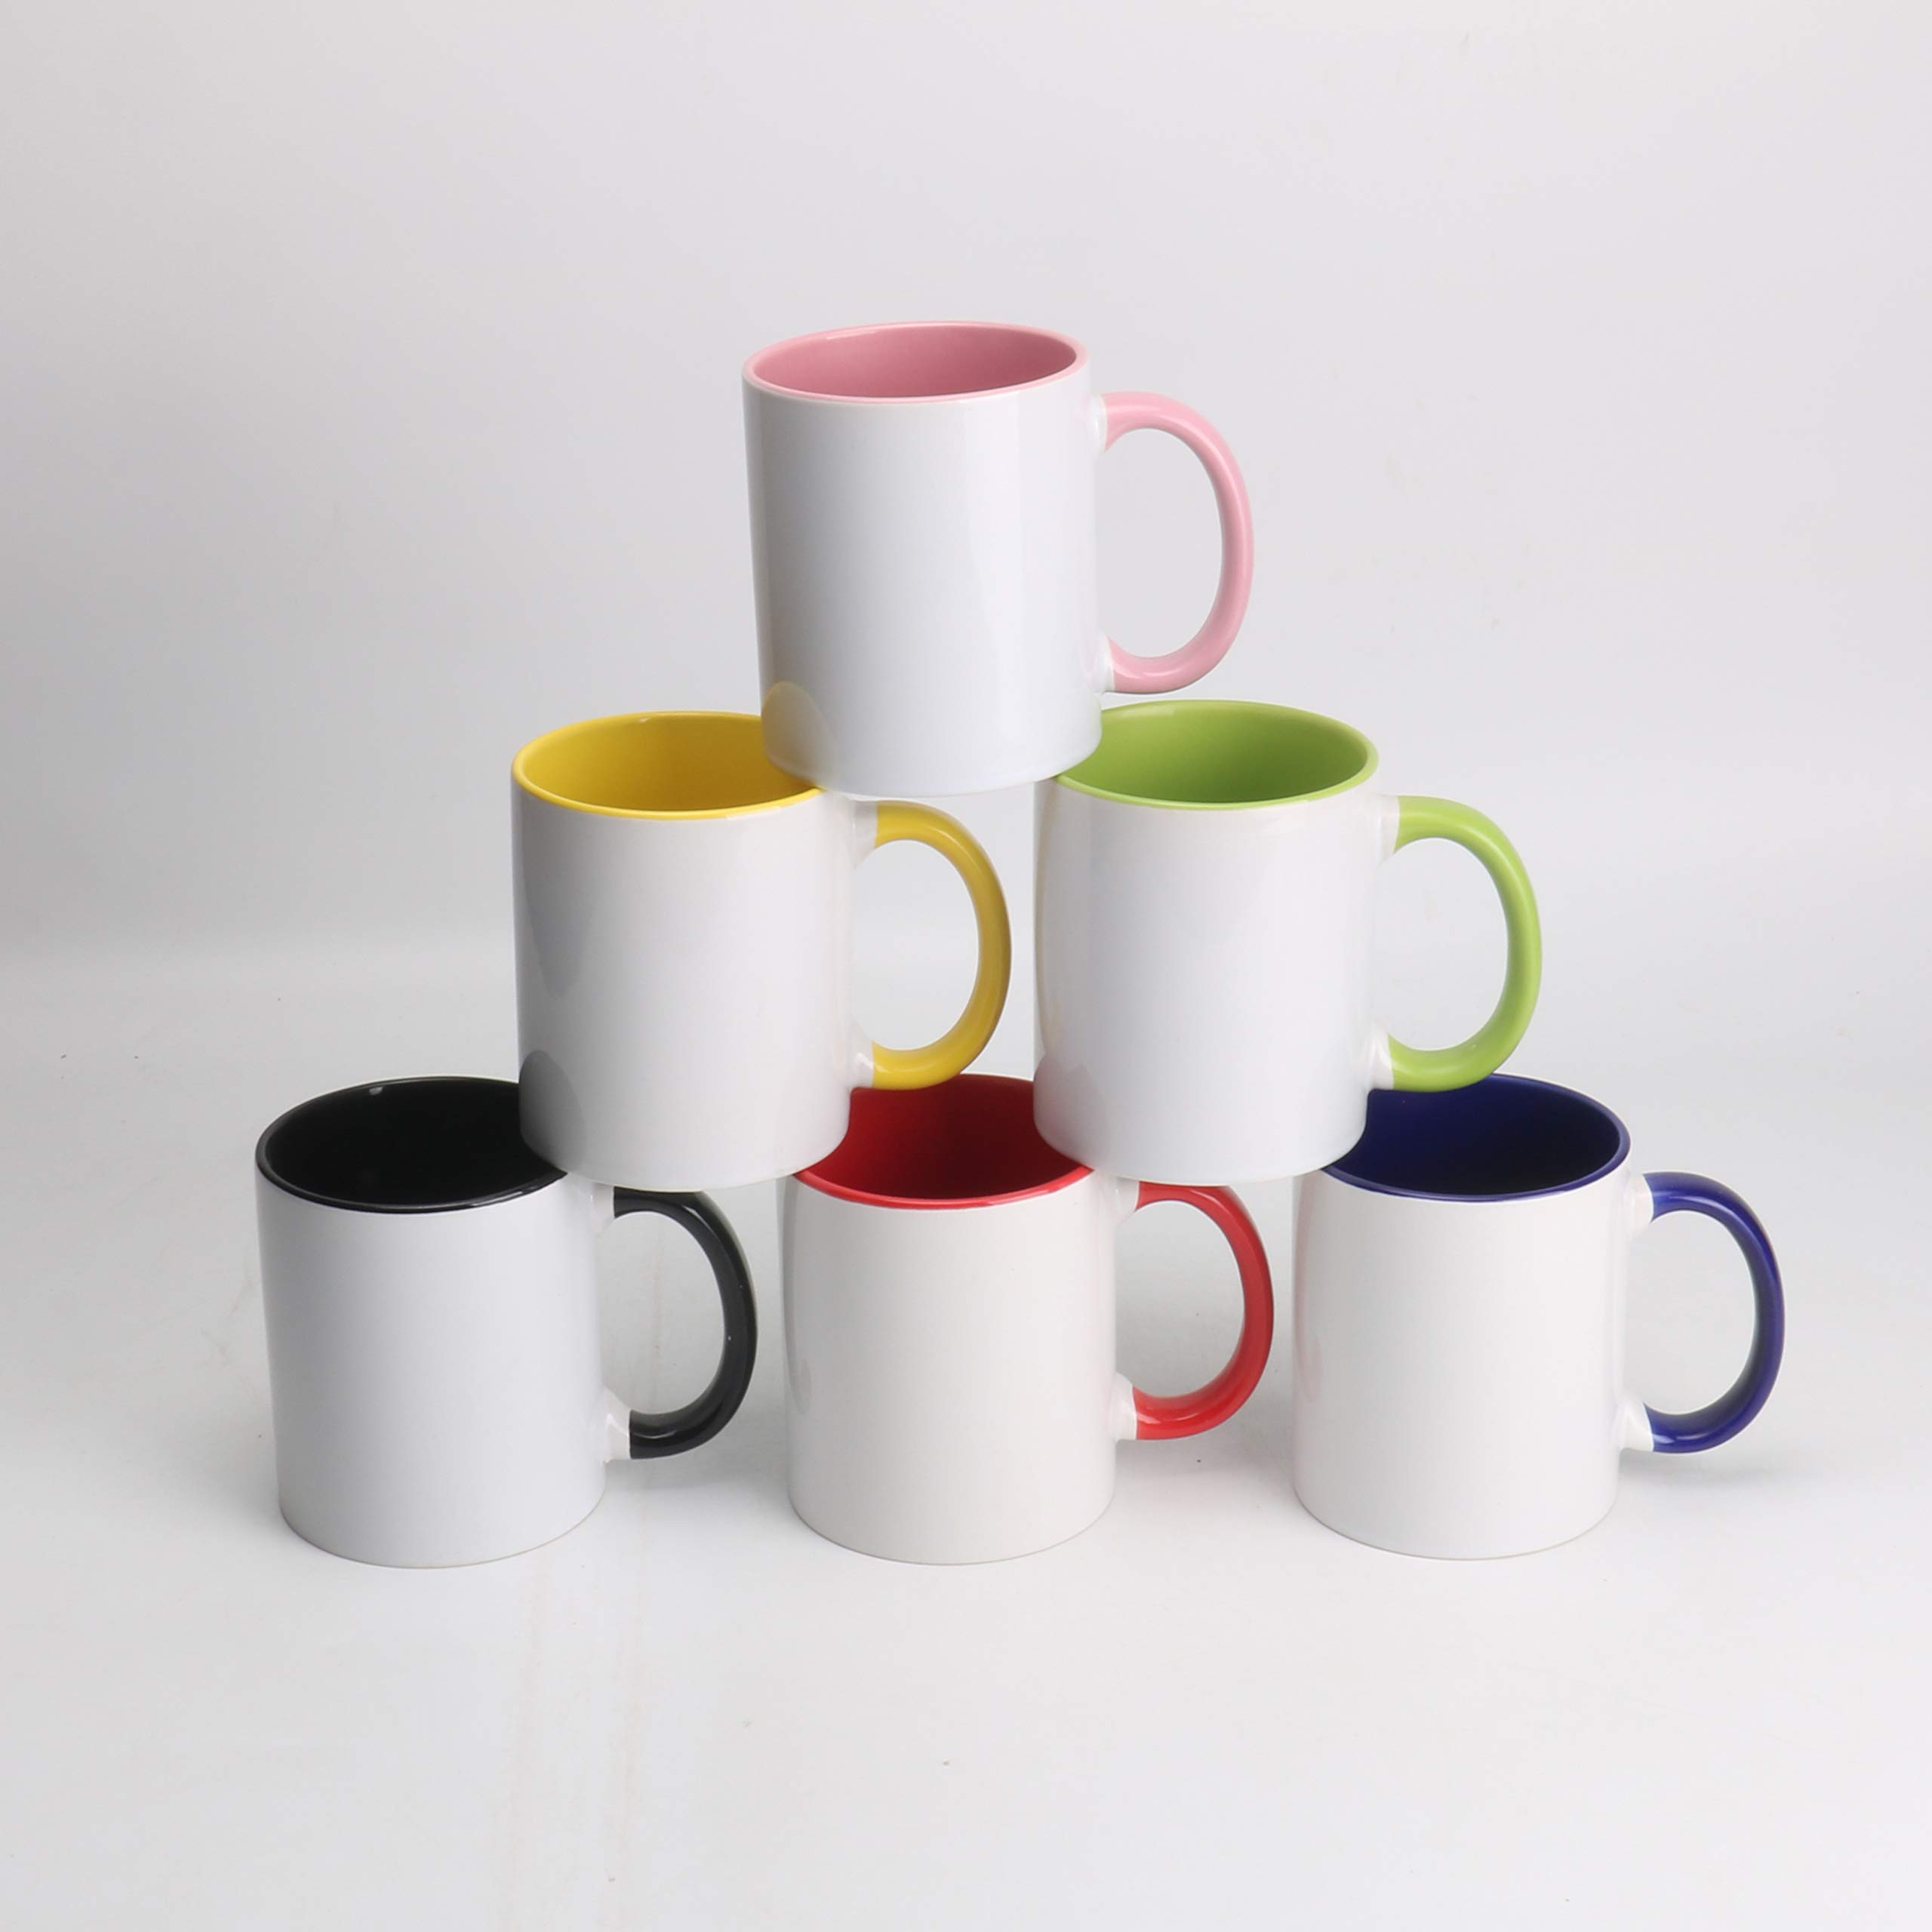 White Ceramic Sublimation Coffee Mug | Same Day Shipping